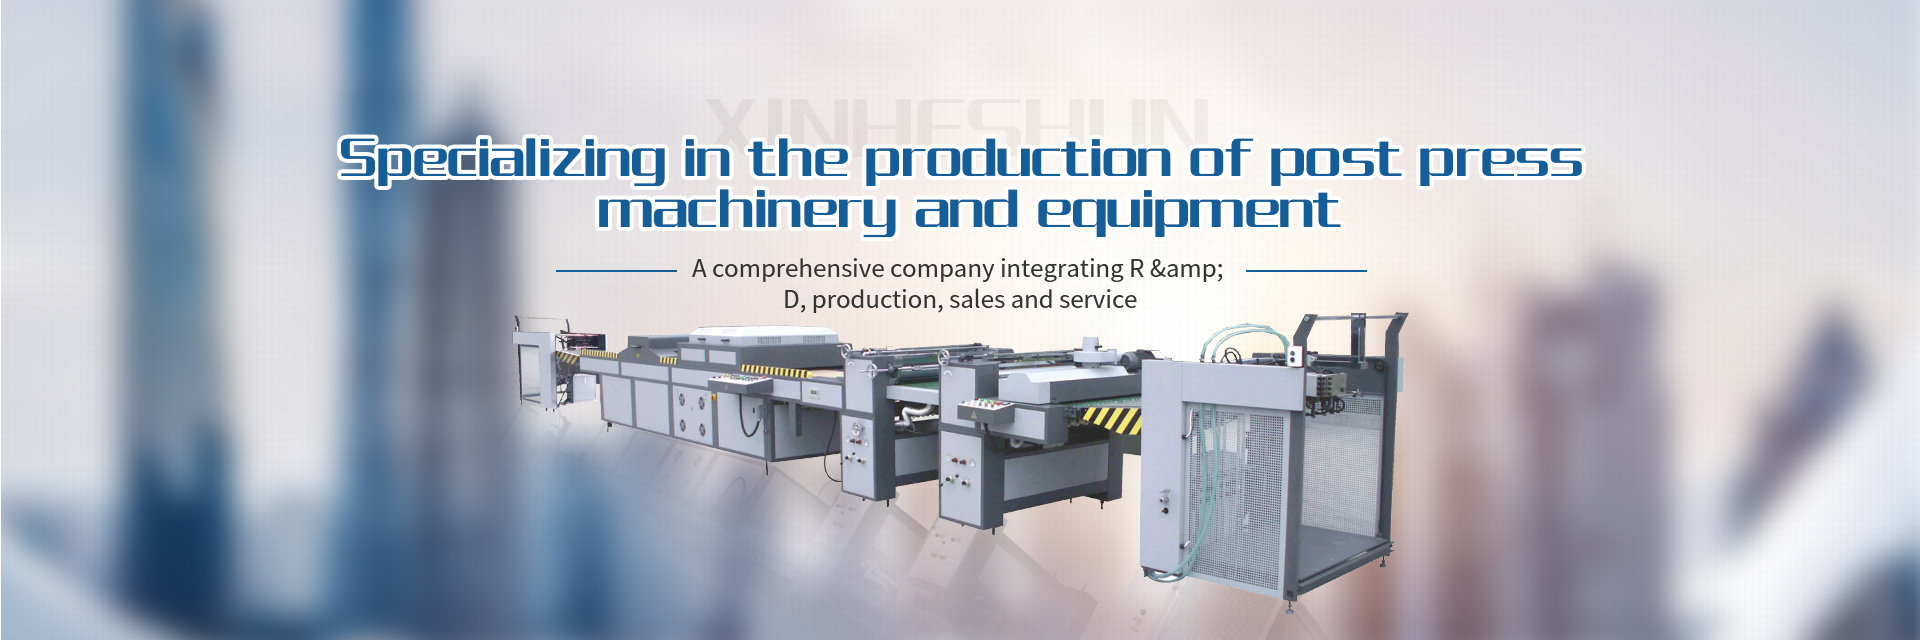 Kunshan Xinheshun Printing Machinery Co., Ltd.